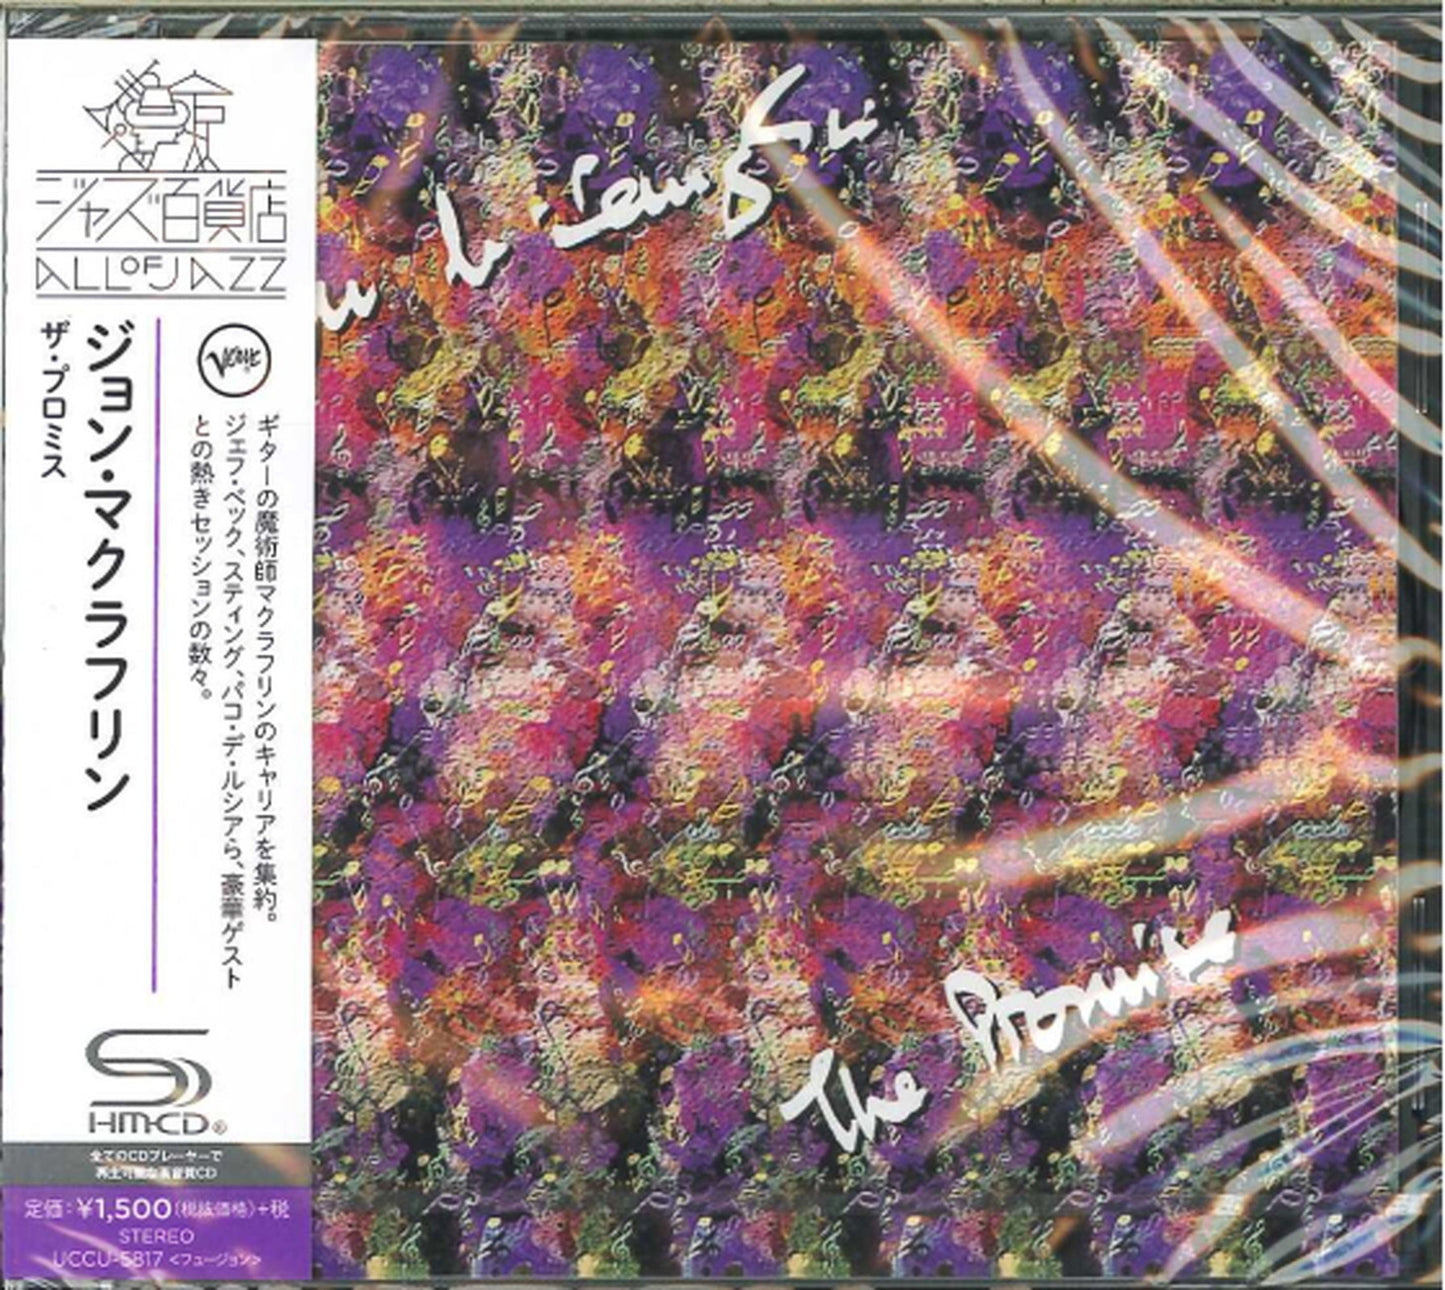 John Mclaughlin - The Promise - Japan  SHM-CD